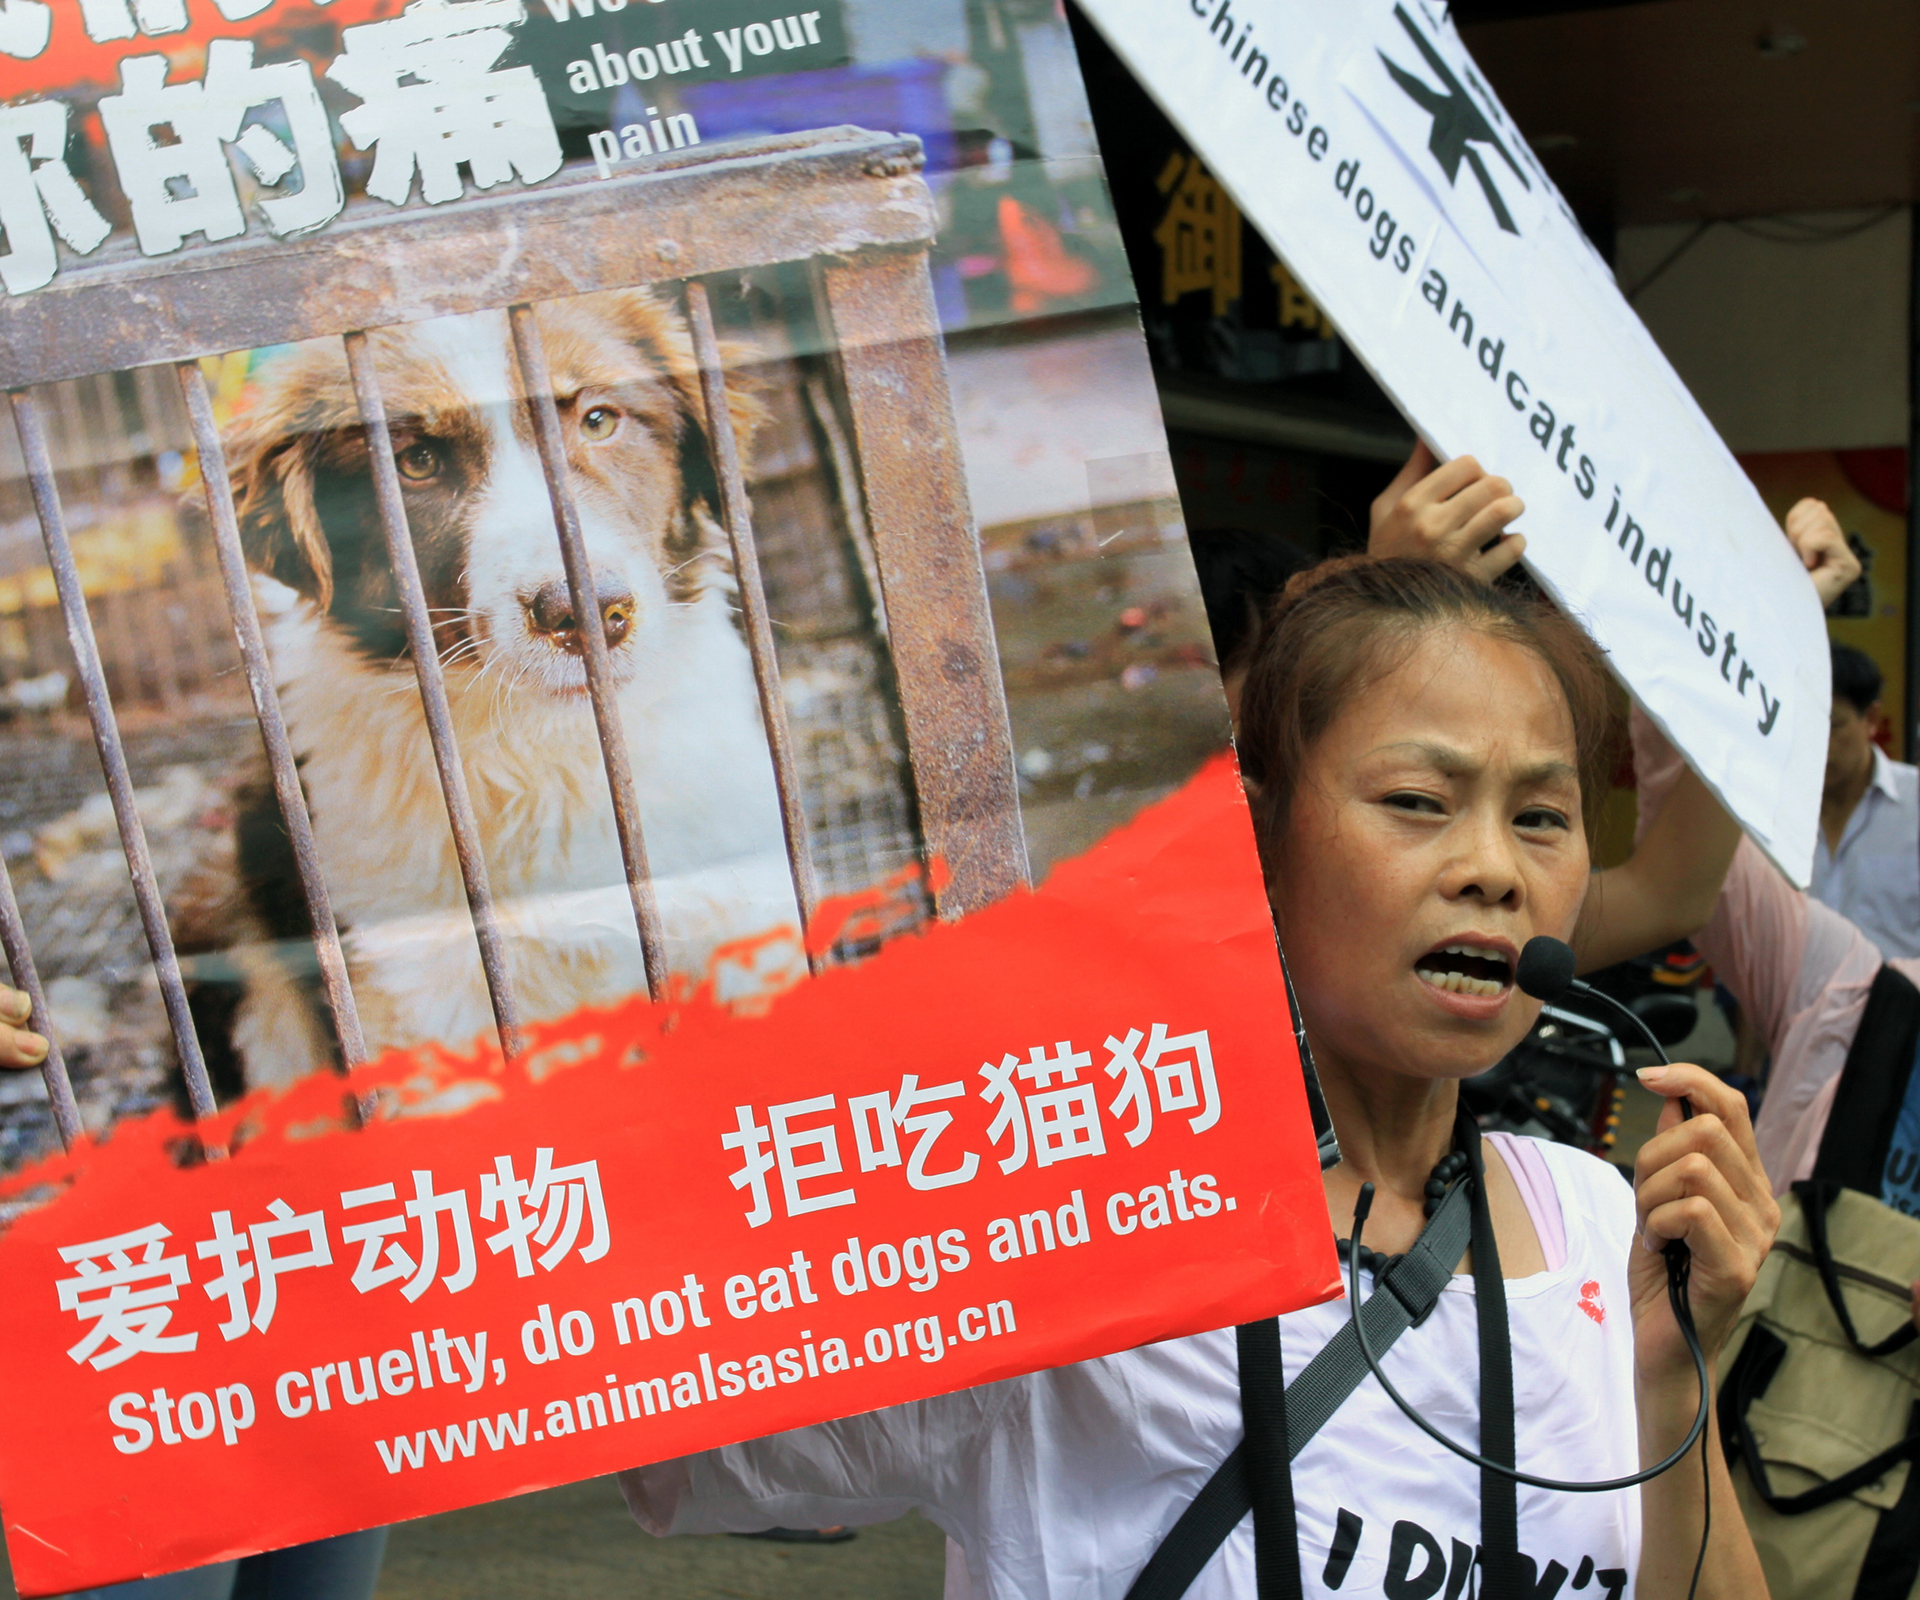 Yulin dog meat ‘Festival of cruelty’